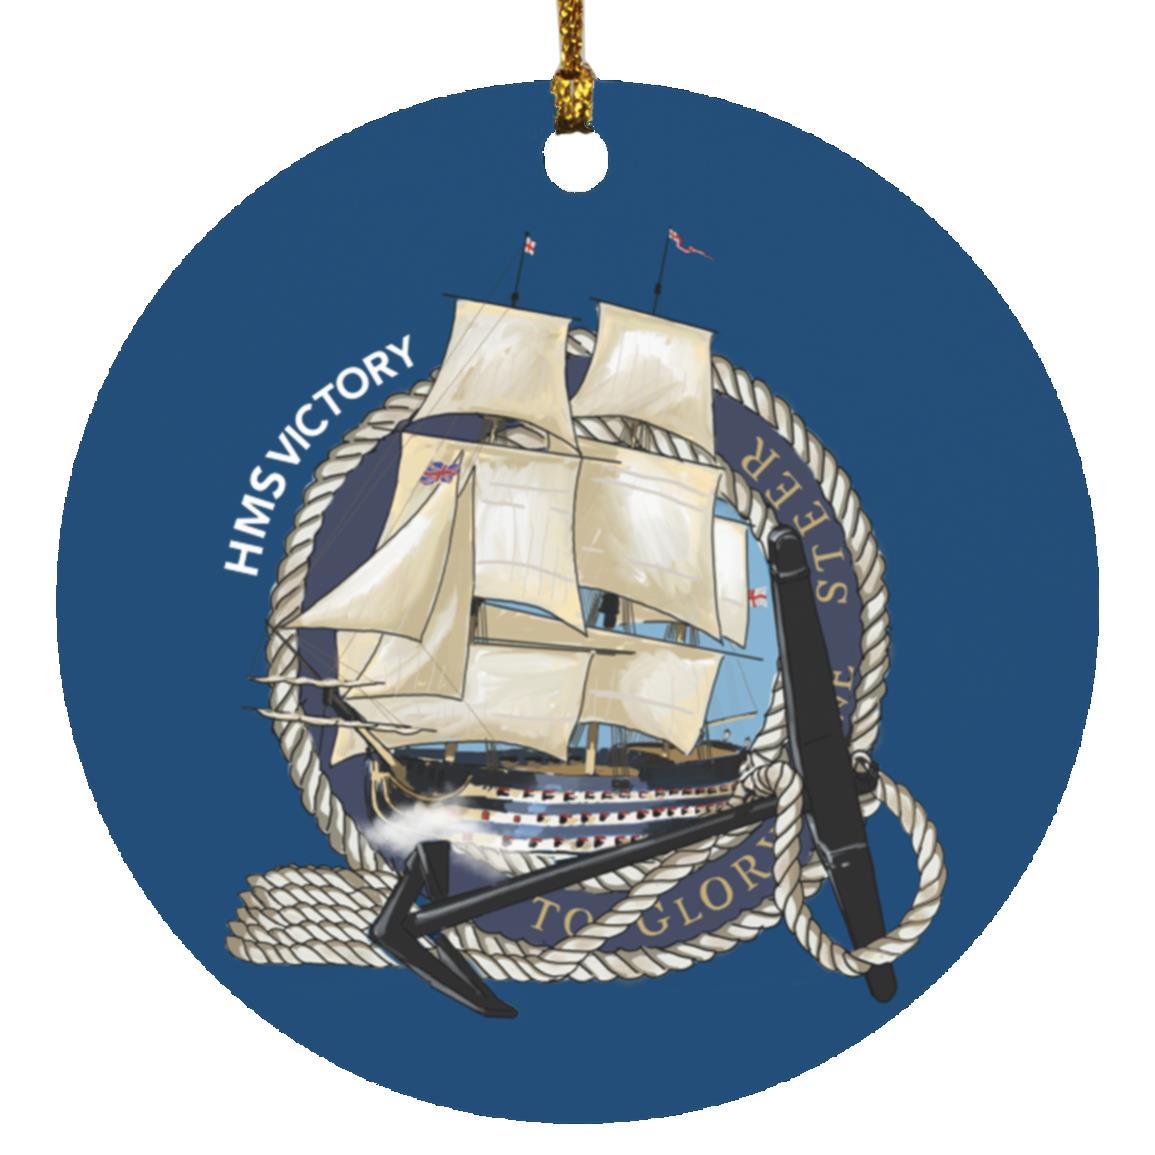 HMS Victory Christmas Ornament